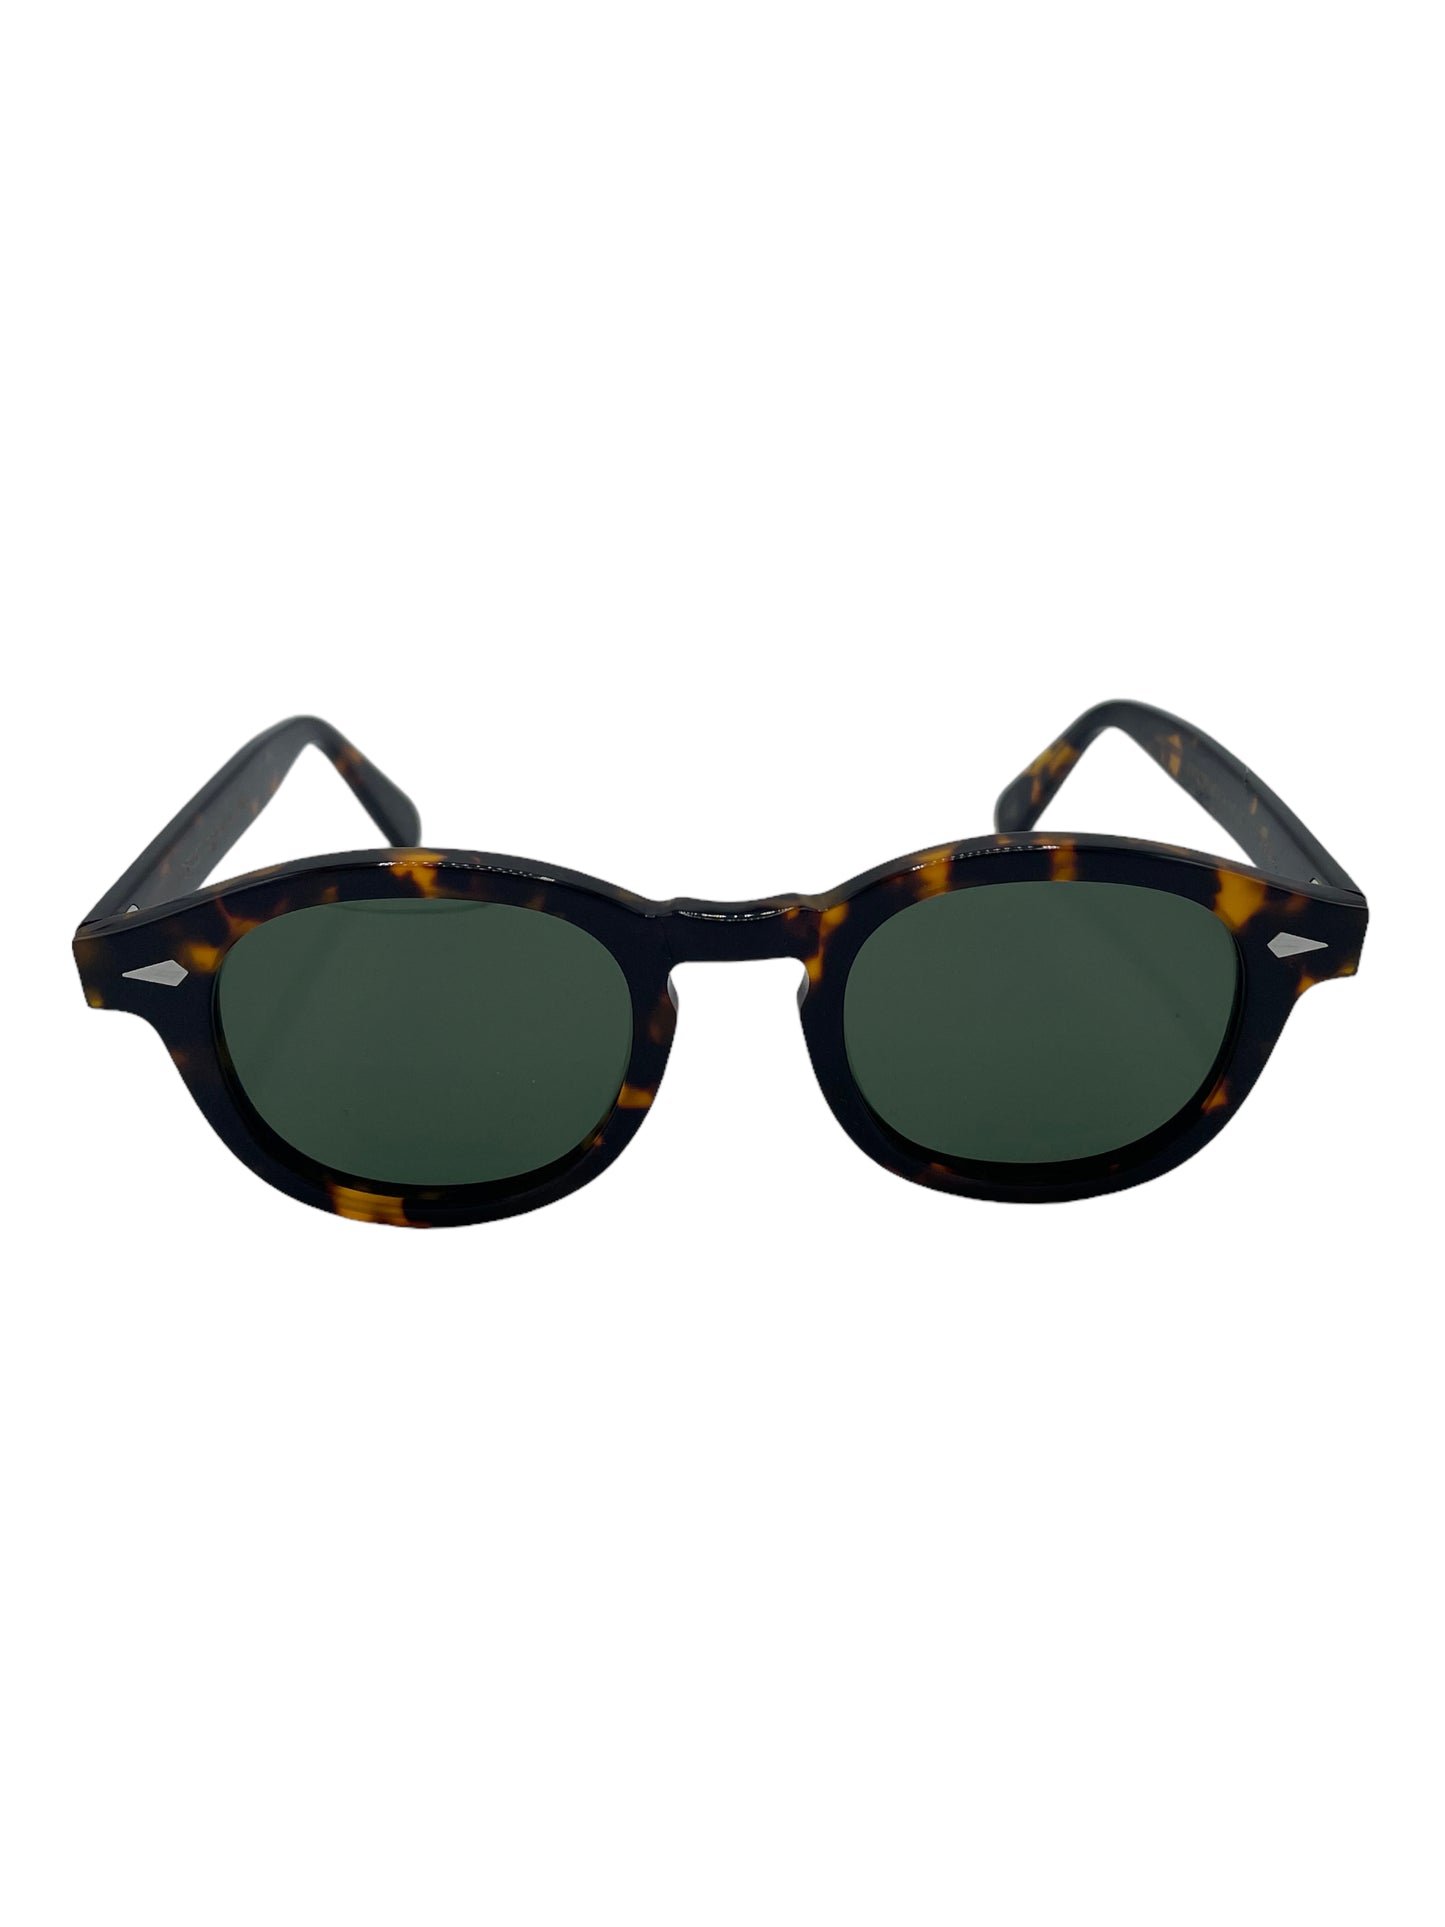 MOSCOT Lemtosh Tortoise Frame & Black Lens Sunglasses